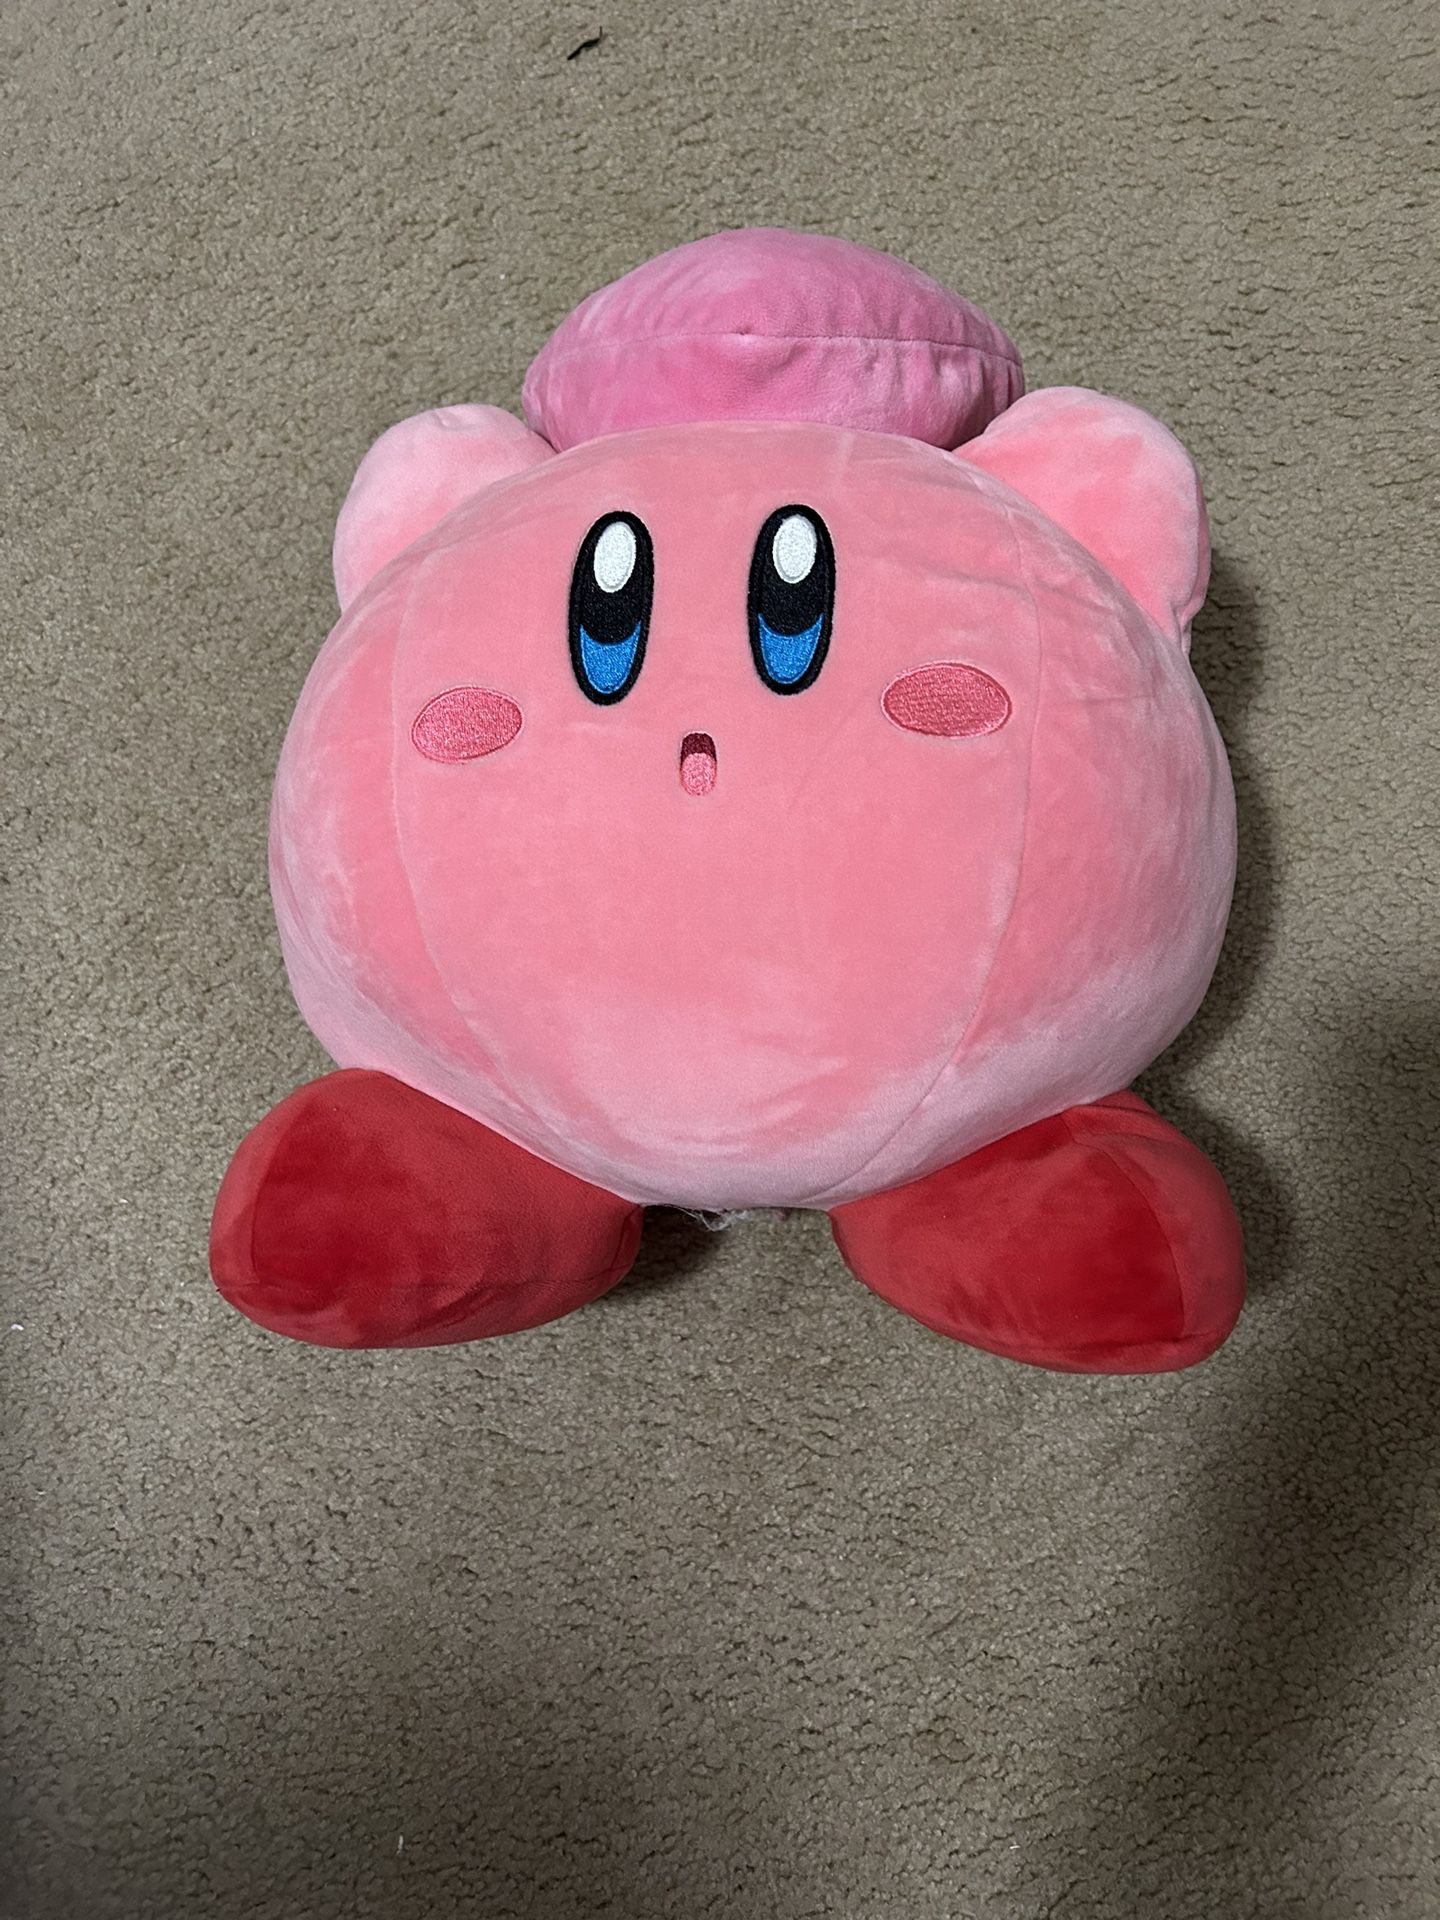 It’s a pink plushie.  $20